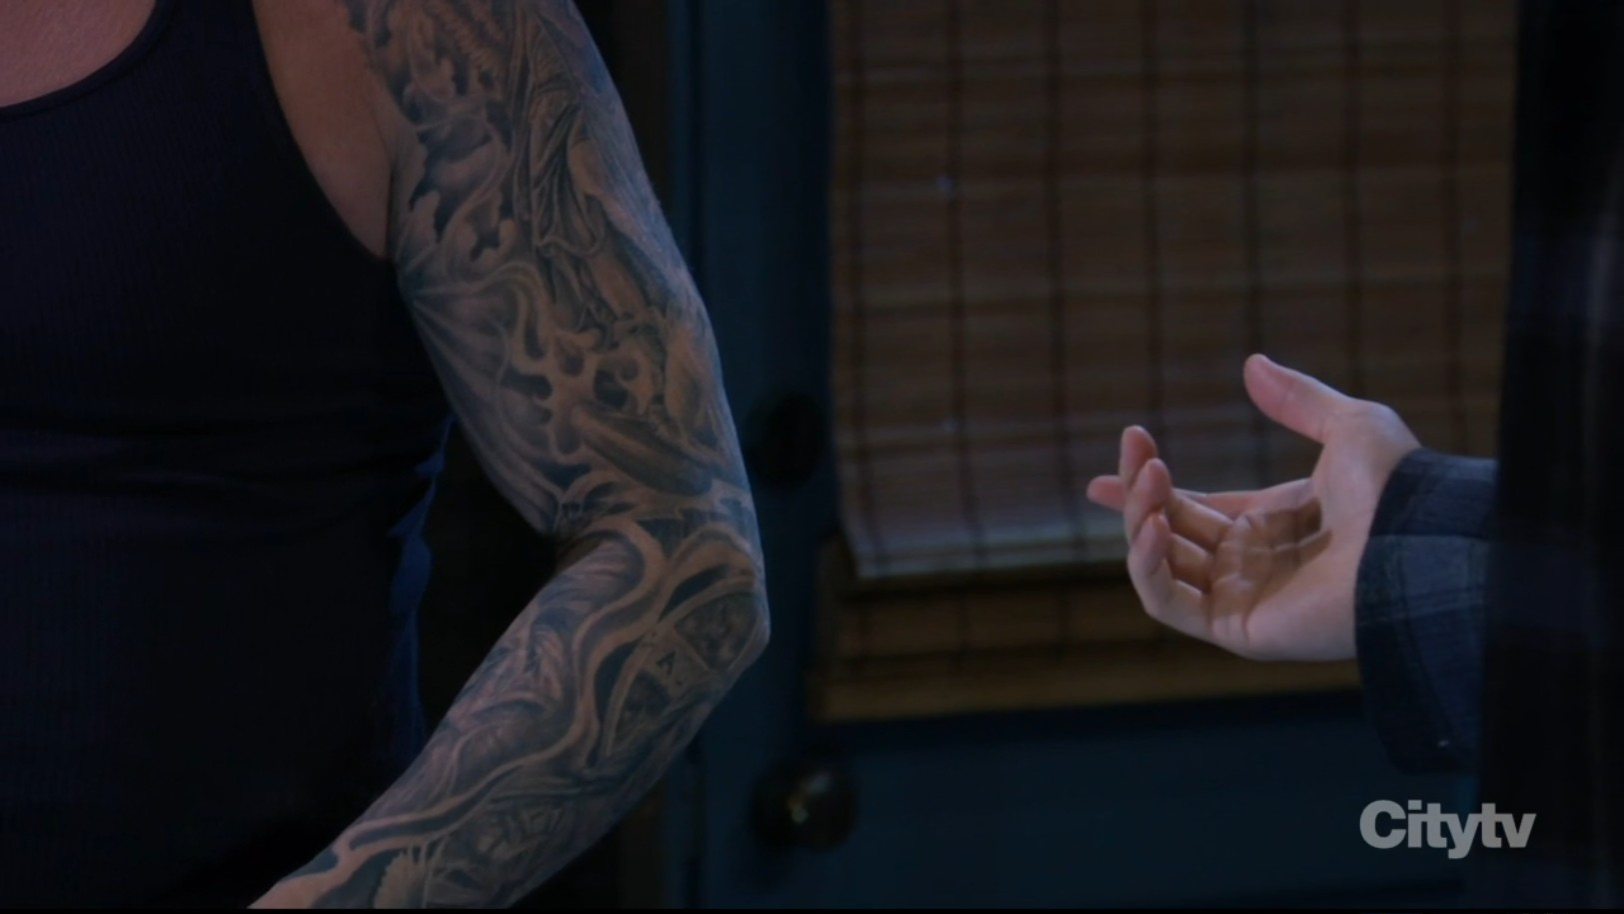 jason shows his tattoos to michael